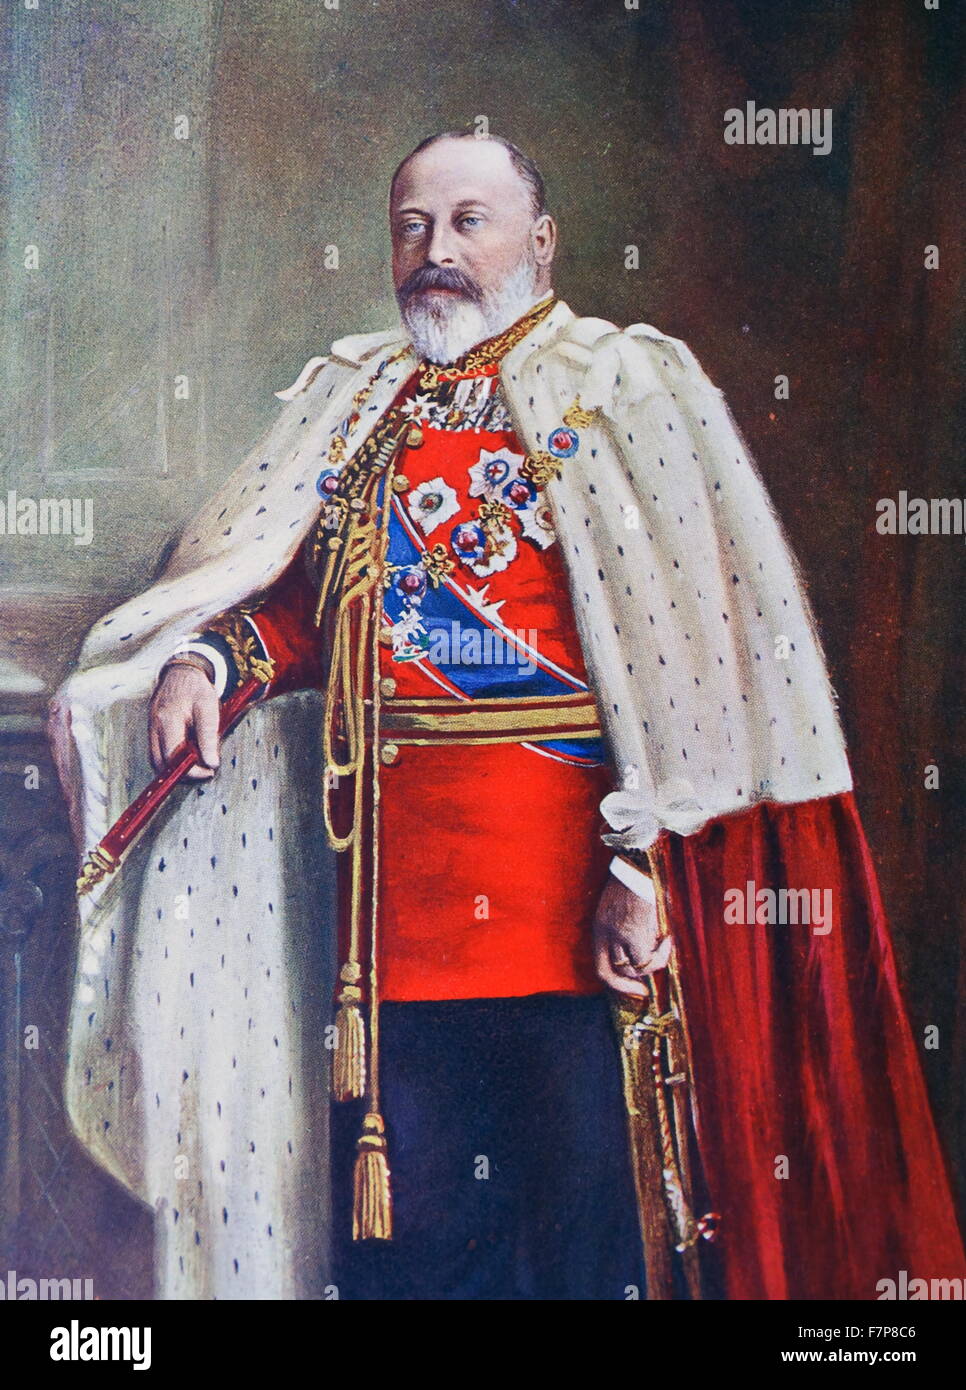 König Edward VII. Stockfoto